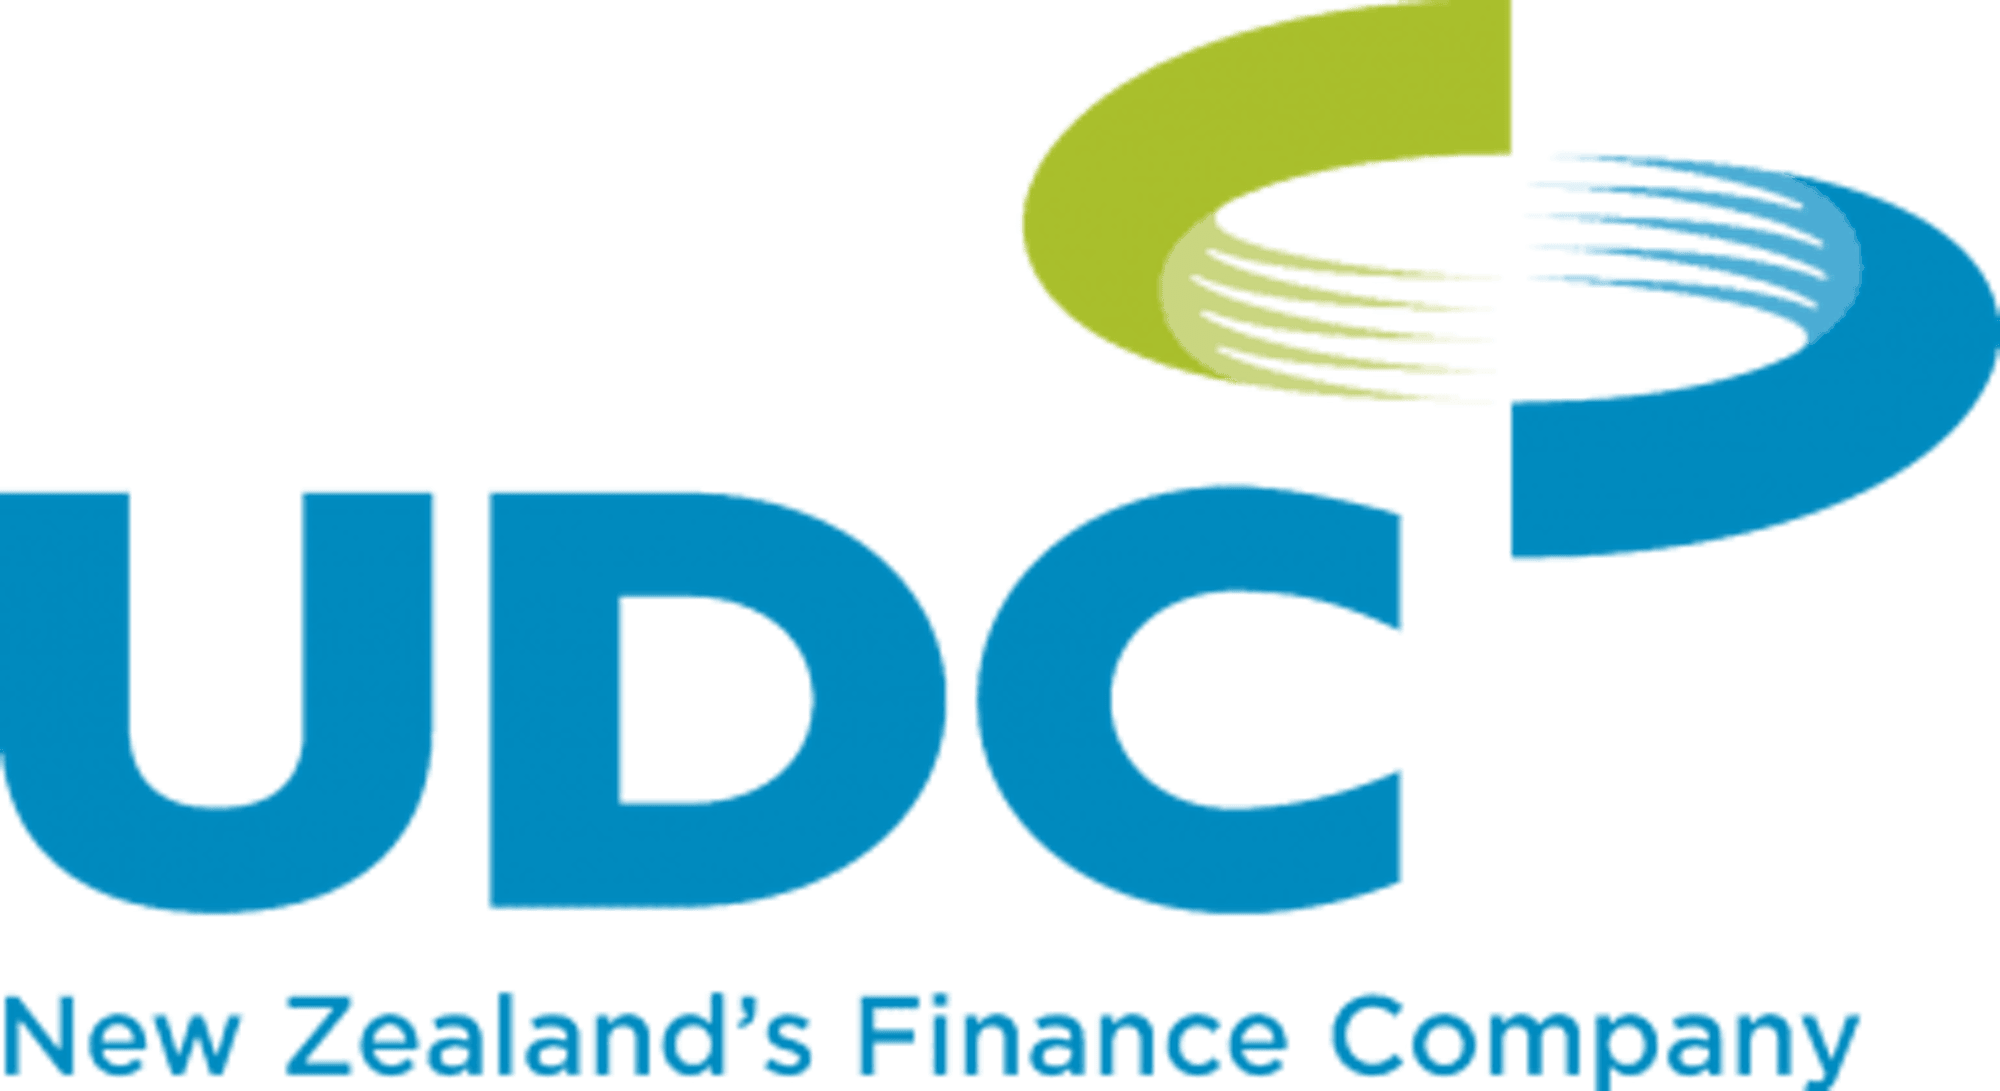 UDC Finance